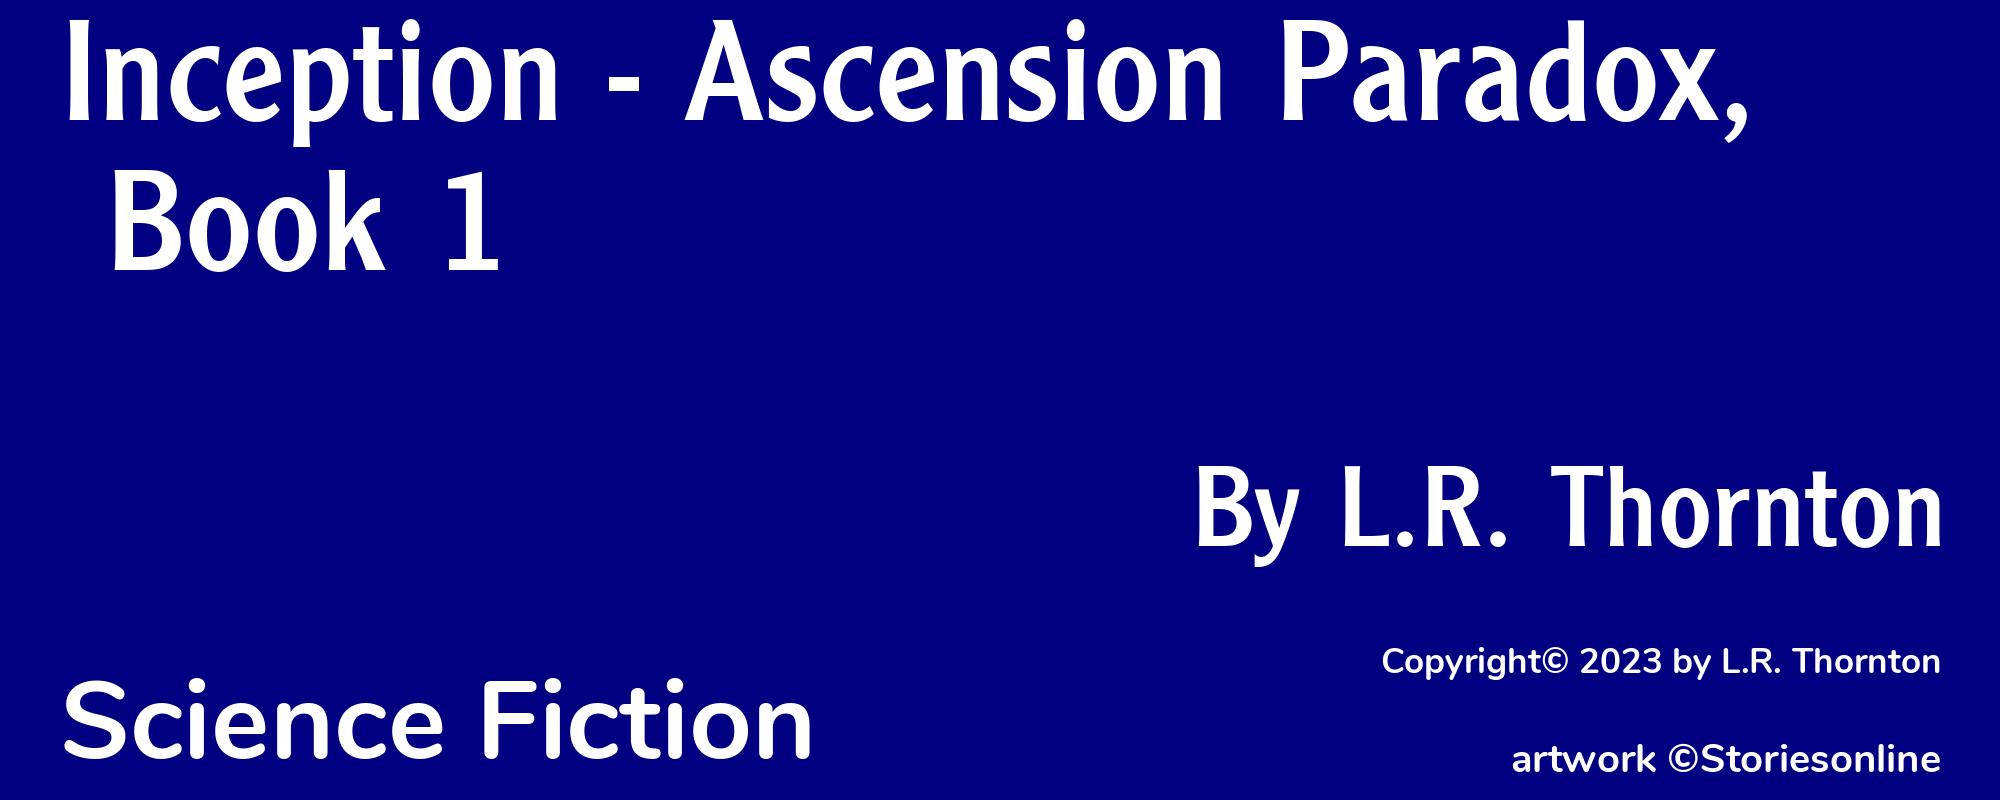 Inception - Ascension Paradox, Book 1 - Cover